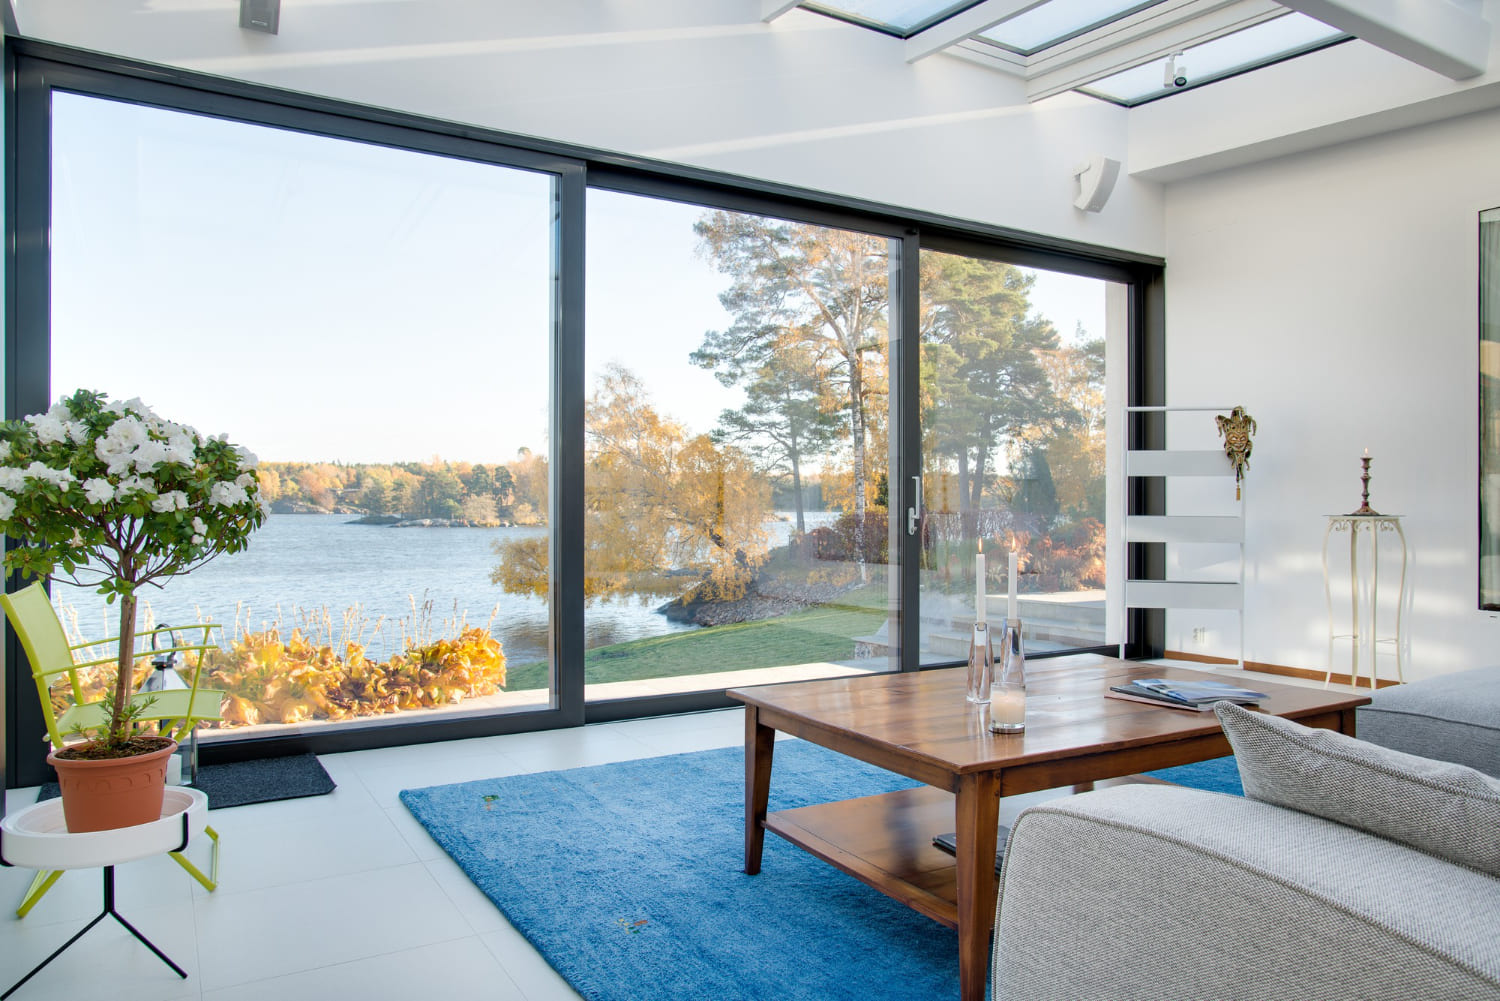 Energy Efficient Windows and Doors